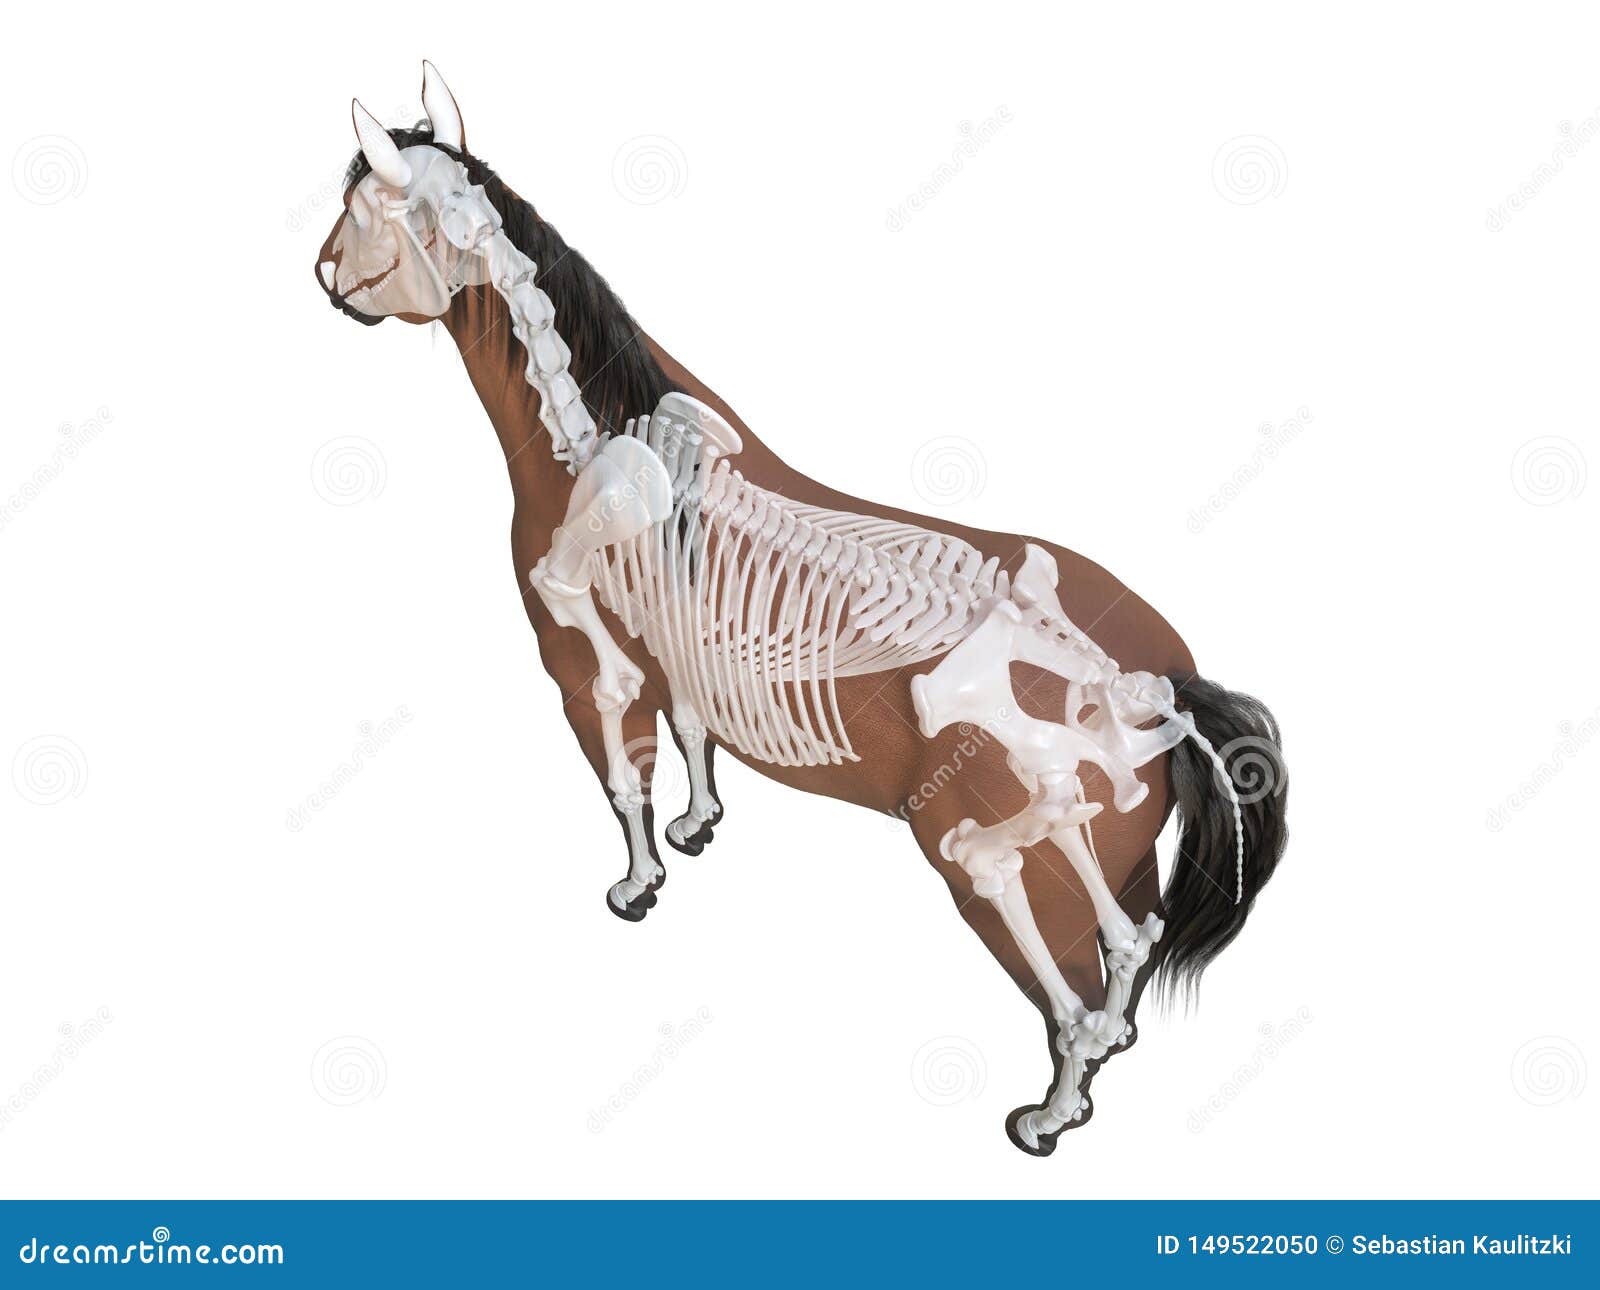 The Horse Anatomy - Skeleton Stock Illustration - Illustration of